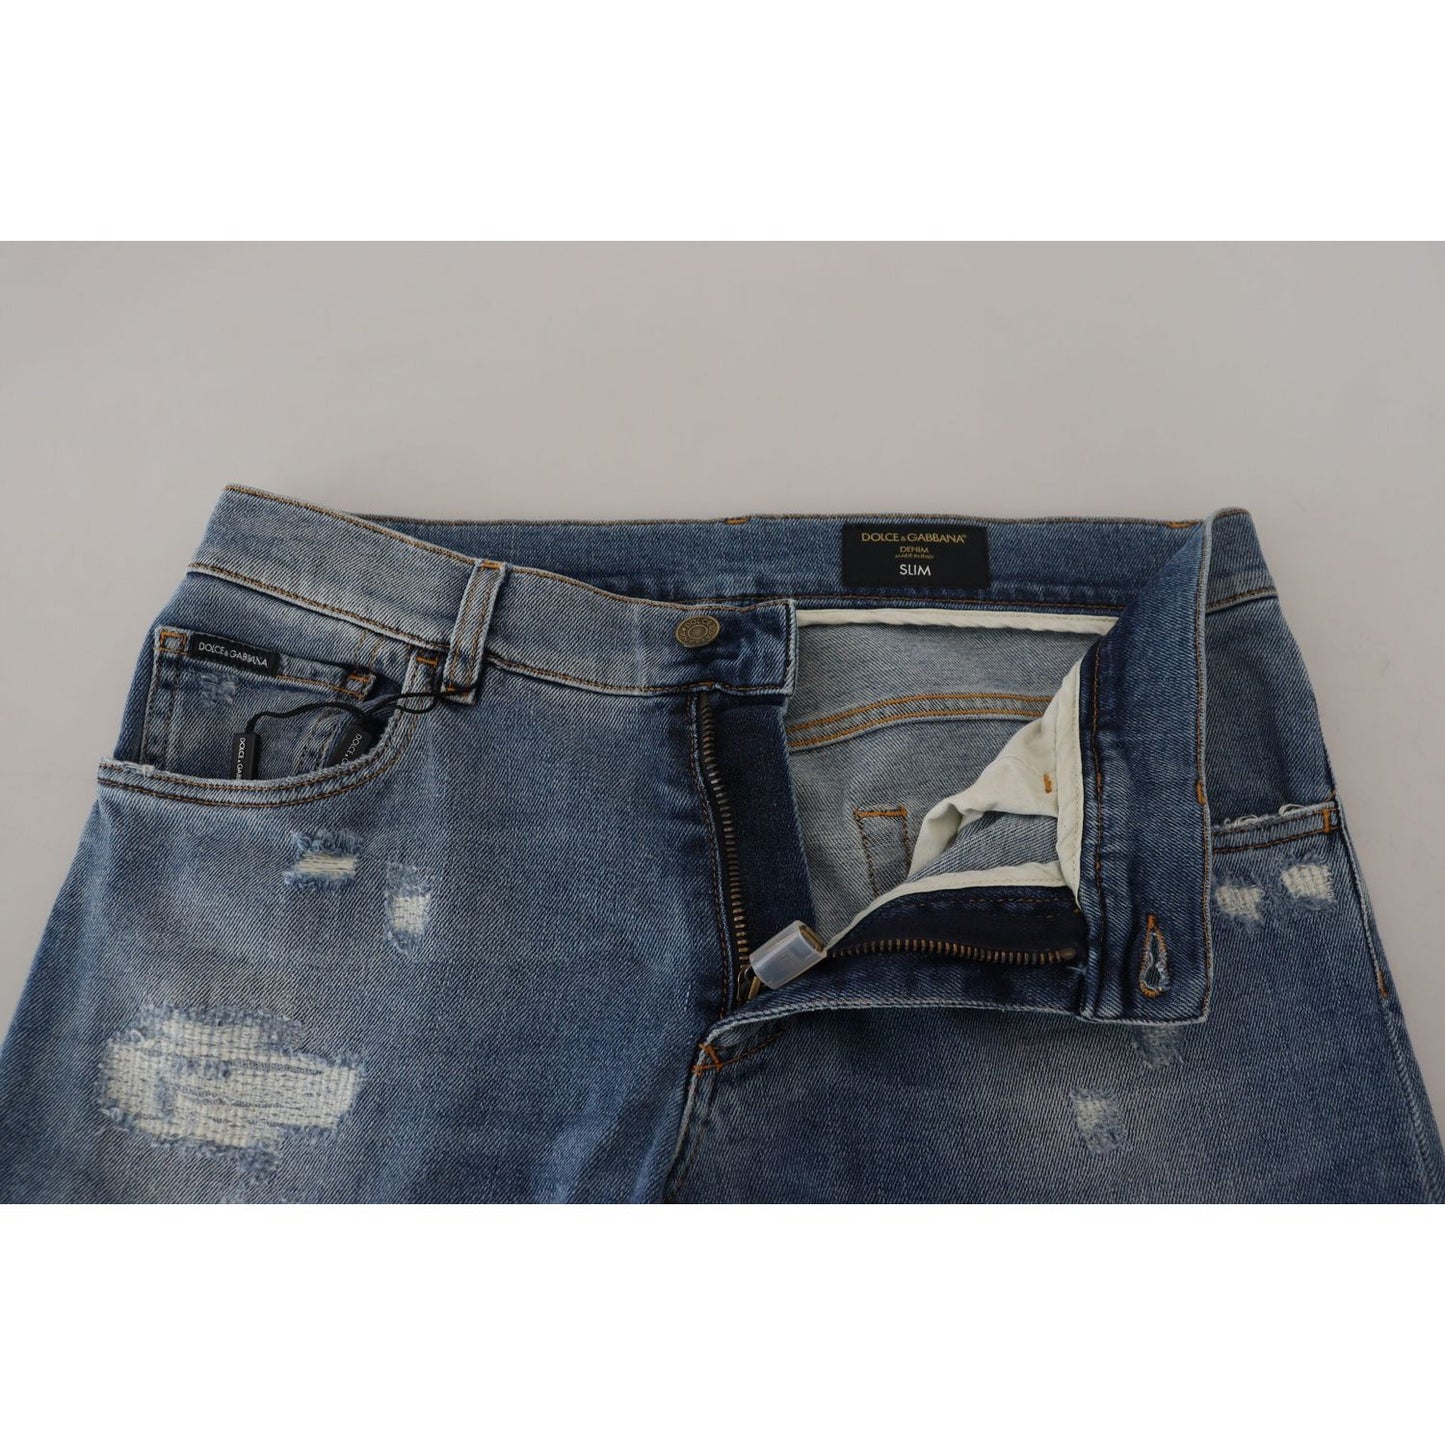 Dolce & Gabbana Chic Slim Fit Italian Denim Jeans blue-slim-fit-tattered-cotton-denim-jeans IMG_6143-scaled-6daae5e9-379.jpg